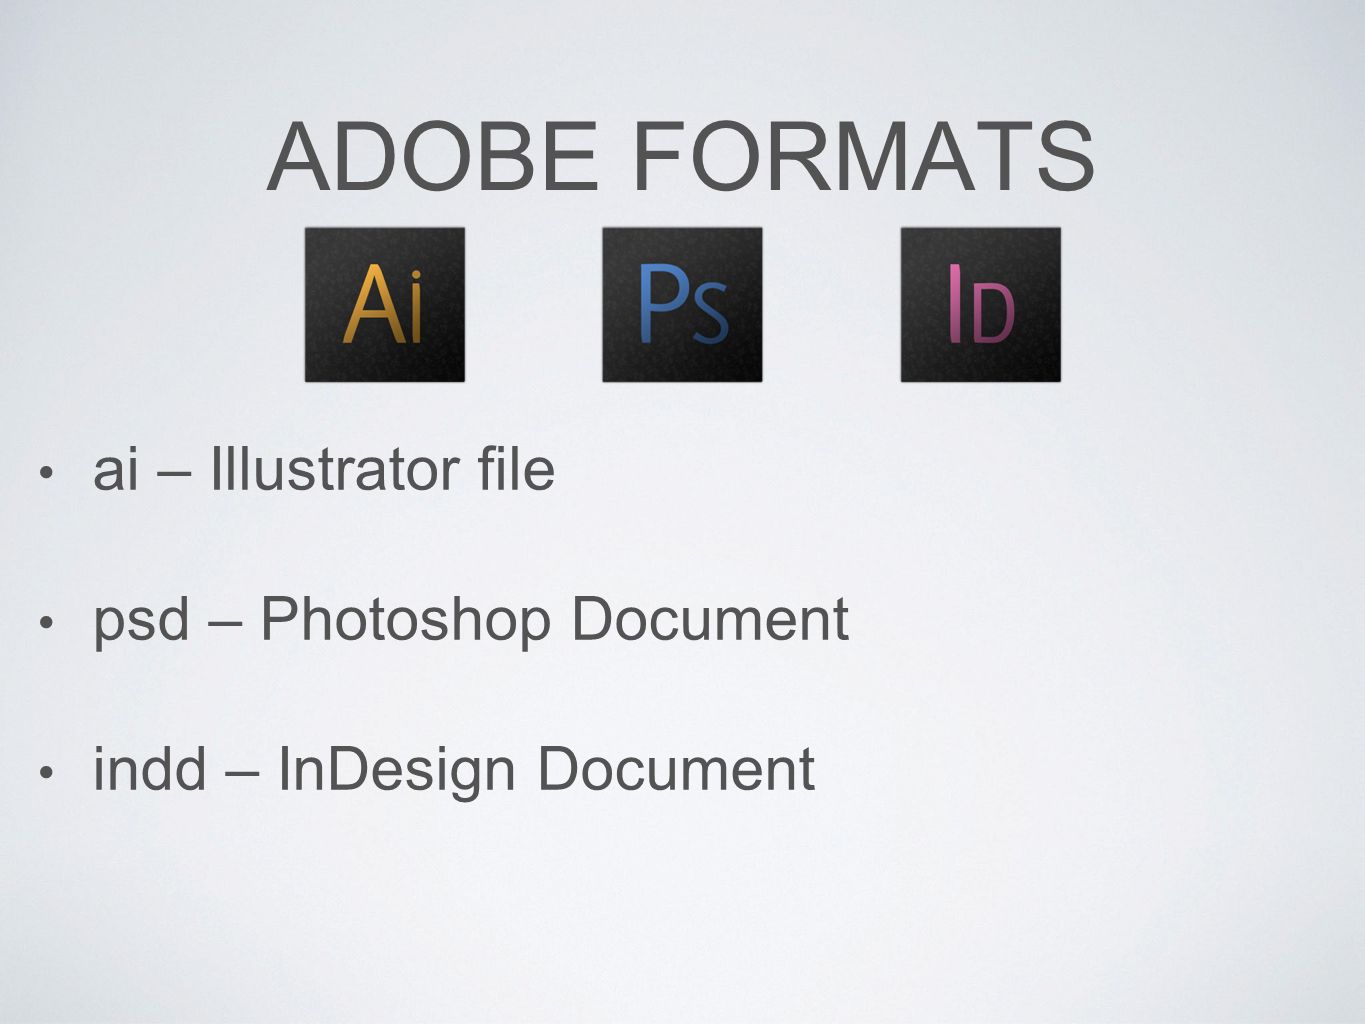 ADOBE FORMATS ai – Illustrator file psd – Photoshop Document indd – InDesign Document